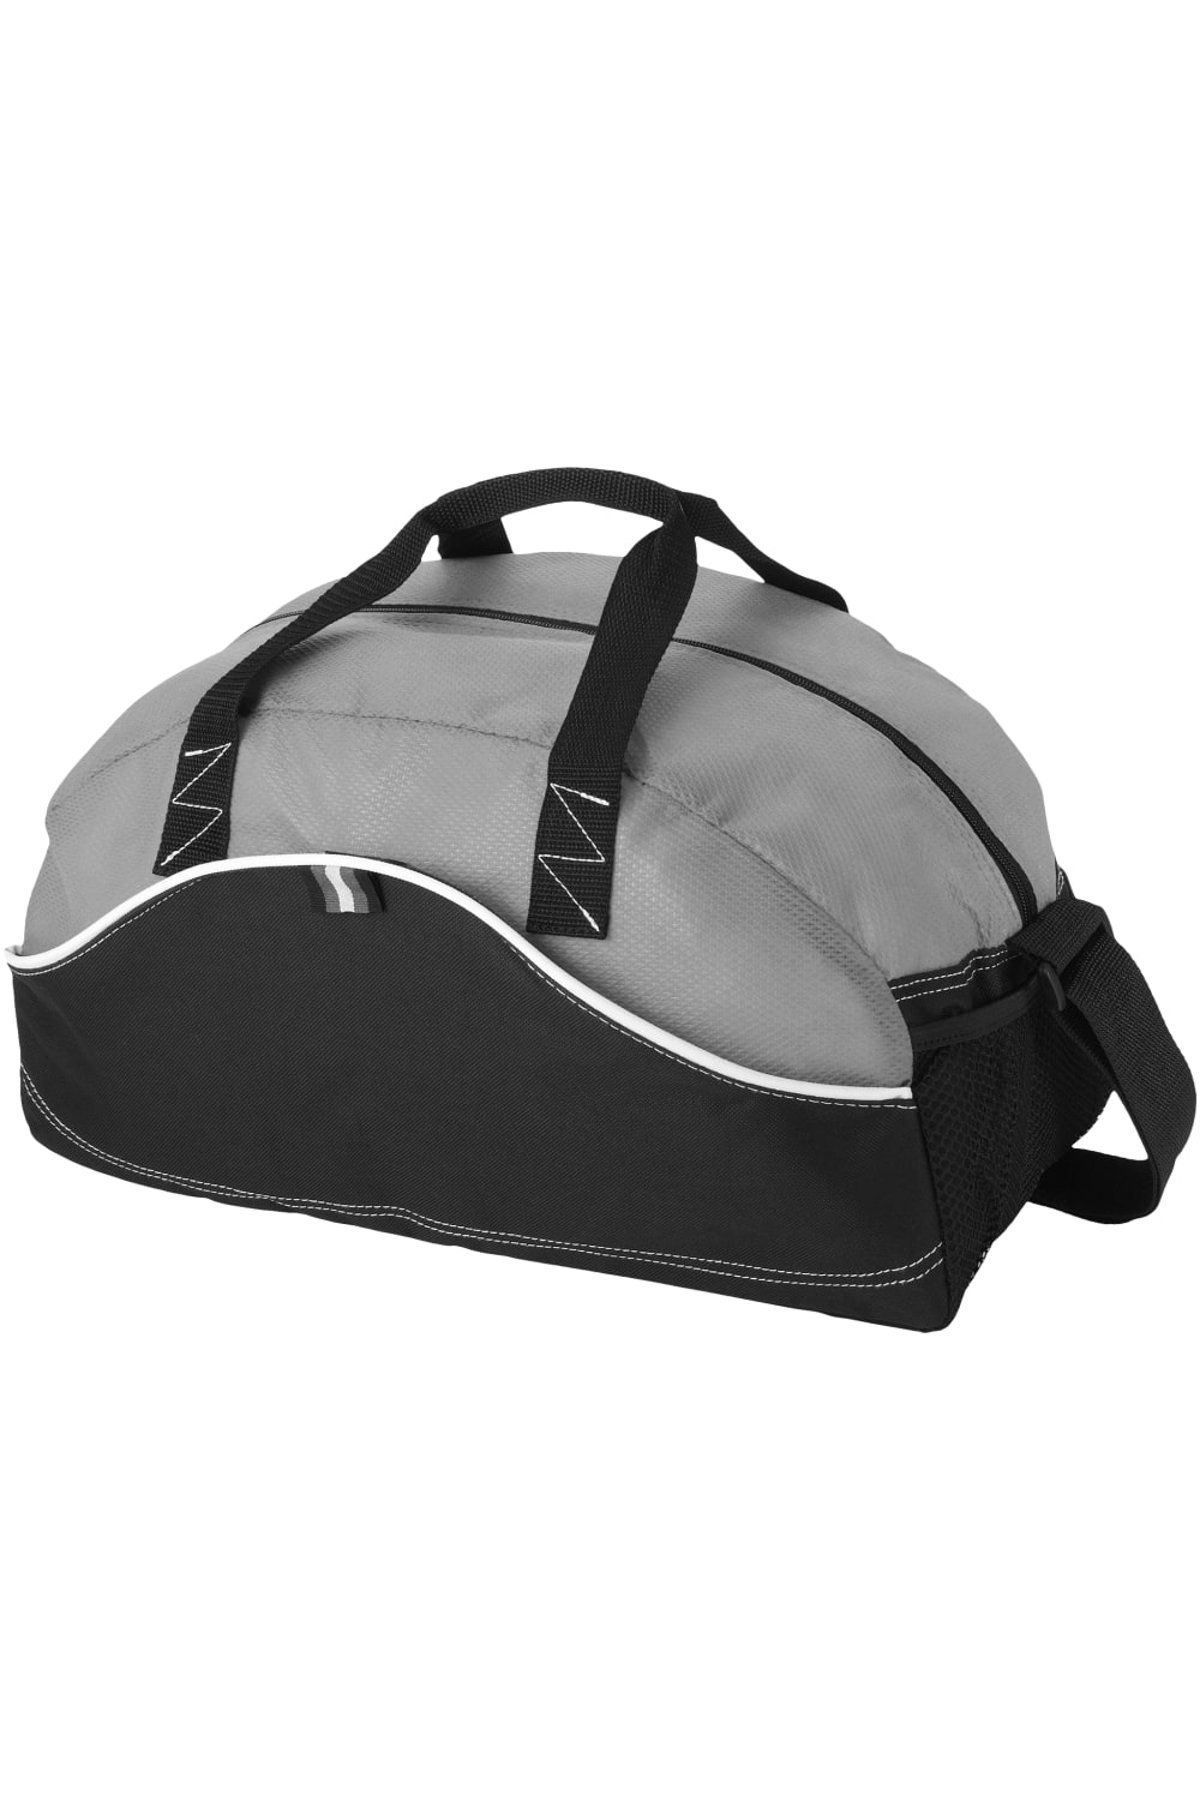 Bullet Black / Light Gray Boomerang Duffel Bag (Solid Gray) x 8.7 x 10.2 inches) | Verishop